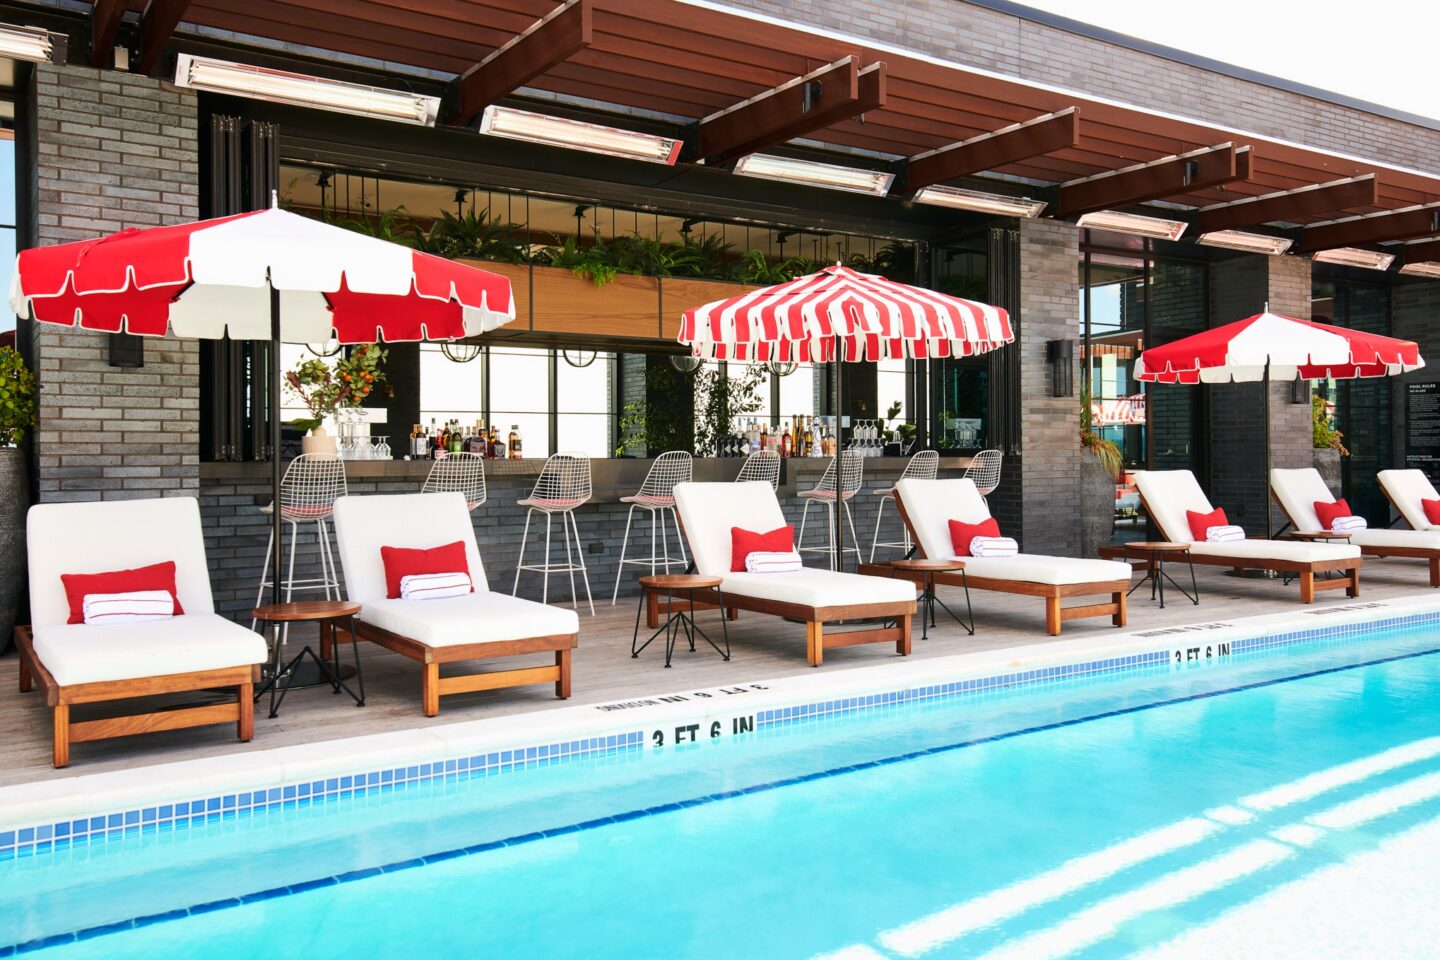 Virgin Hotels Nashville - Pools to Enjoy This Summer Guide